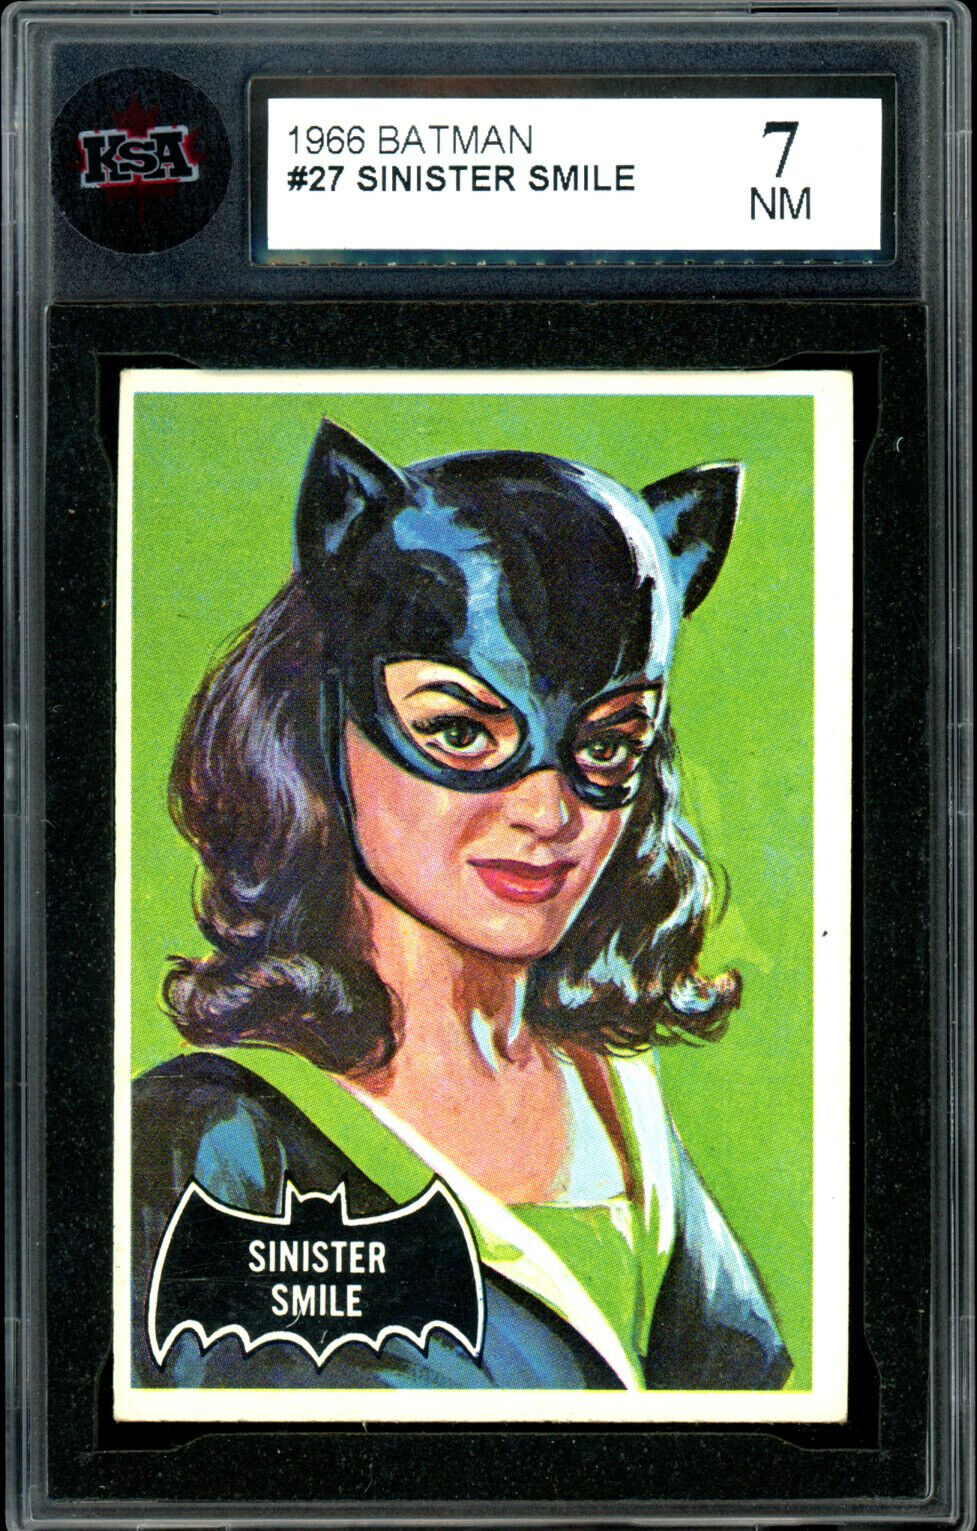 1966 TOPPS USA BATMAN BLACK BAT #27 Cat woman Sinister Smile Rookie KSA 7 NM RC